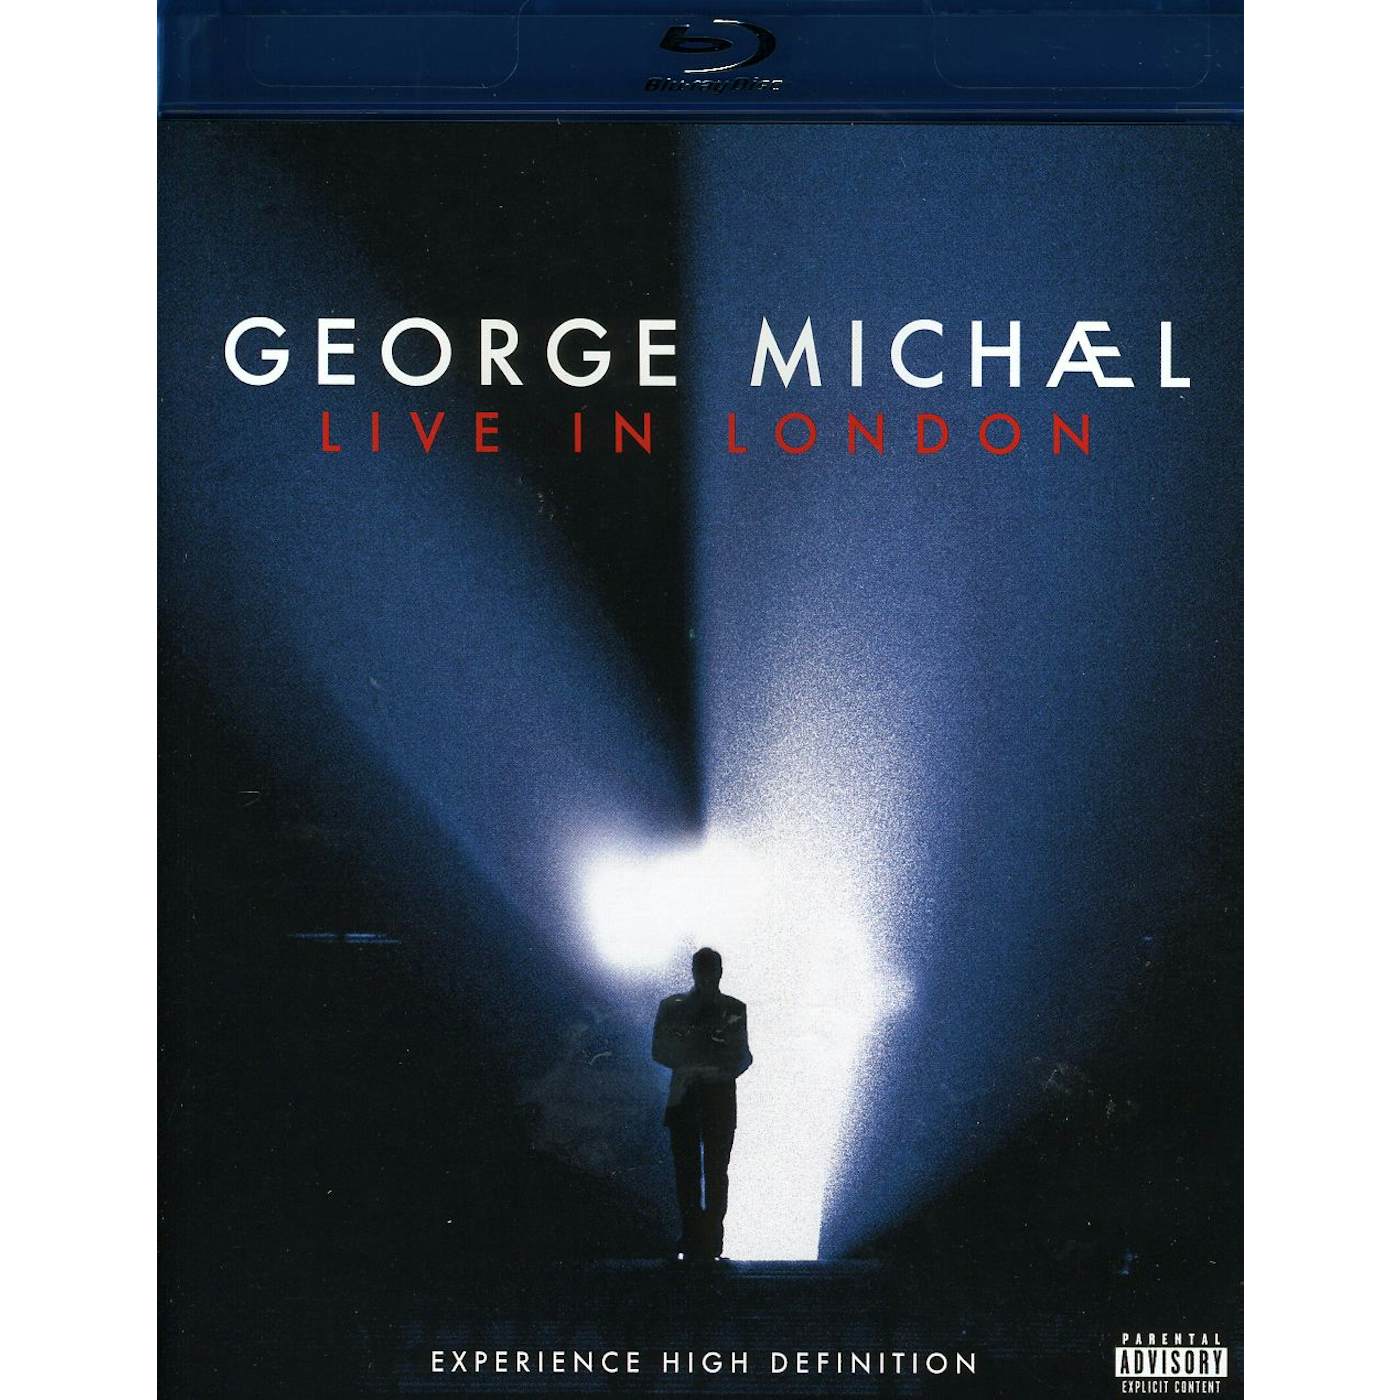 George Michael LIVE IN LONDON Blu-ray